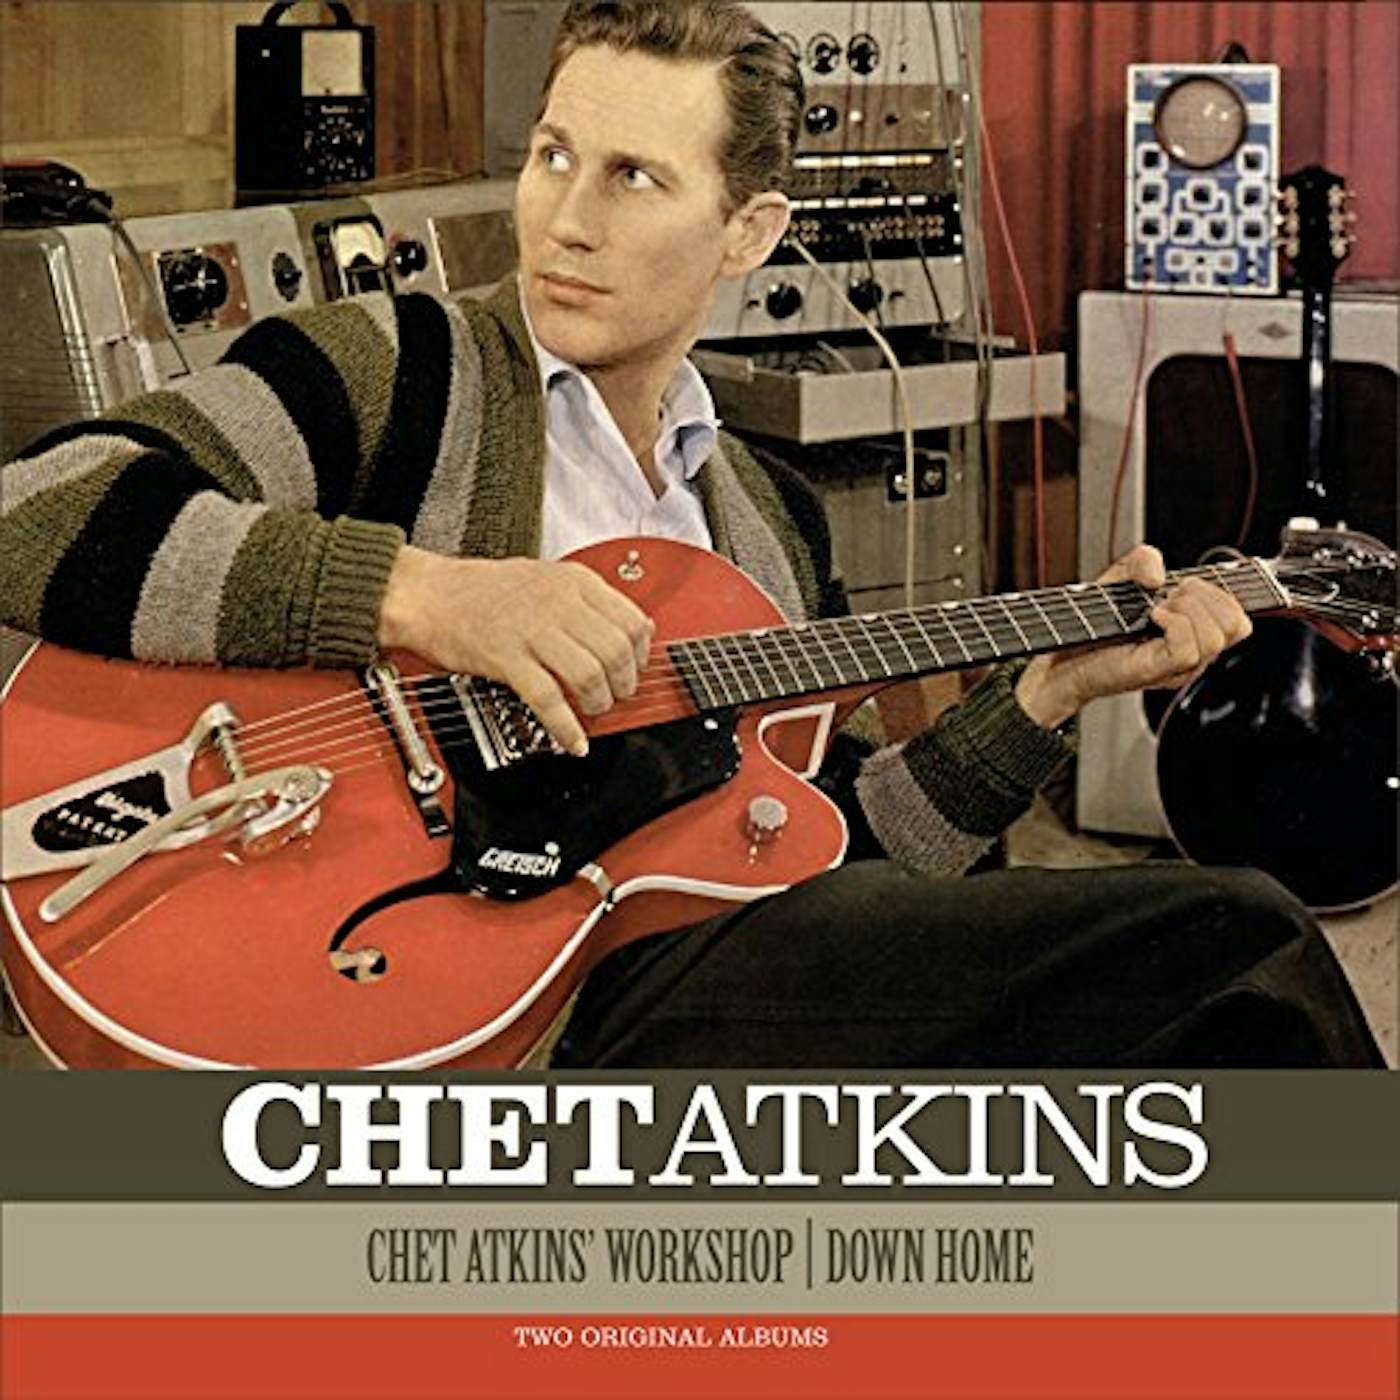 Chet Atkins WORKSHOP / DOWN HOME Vinyl Record